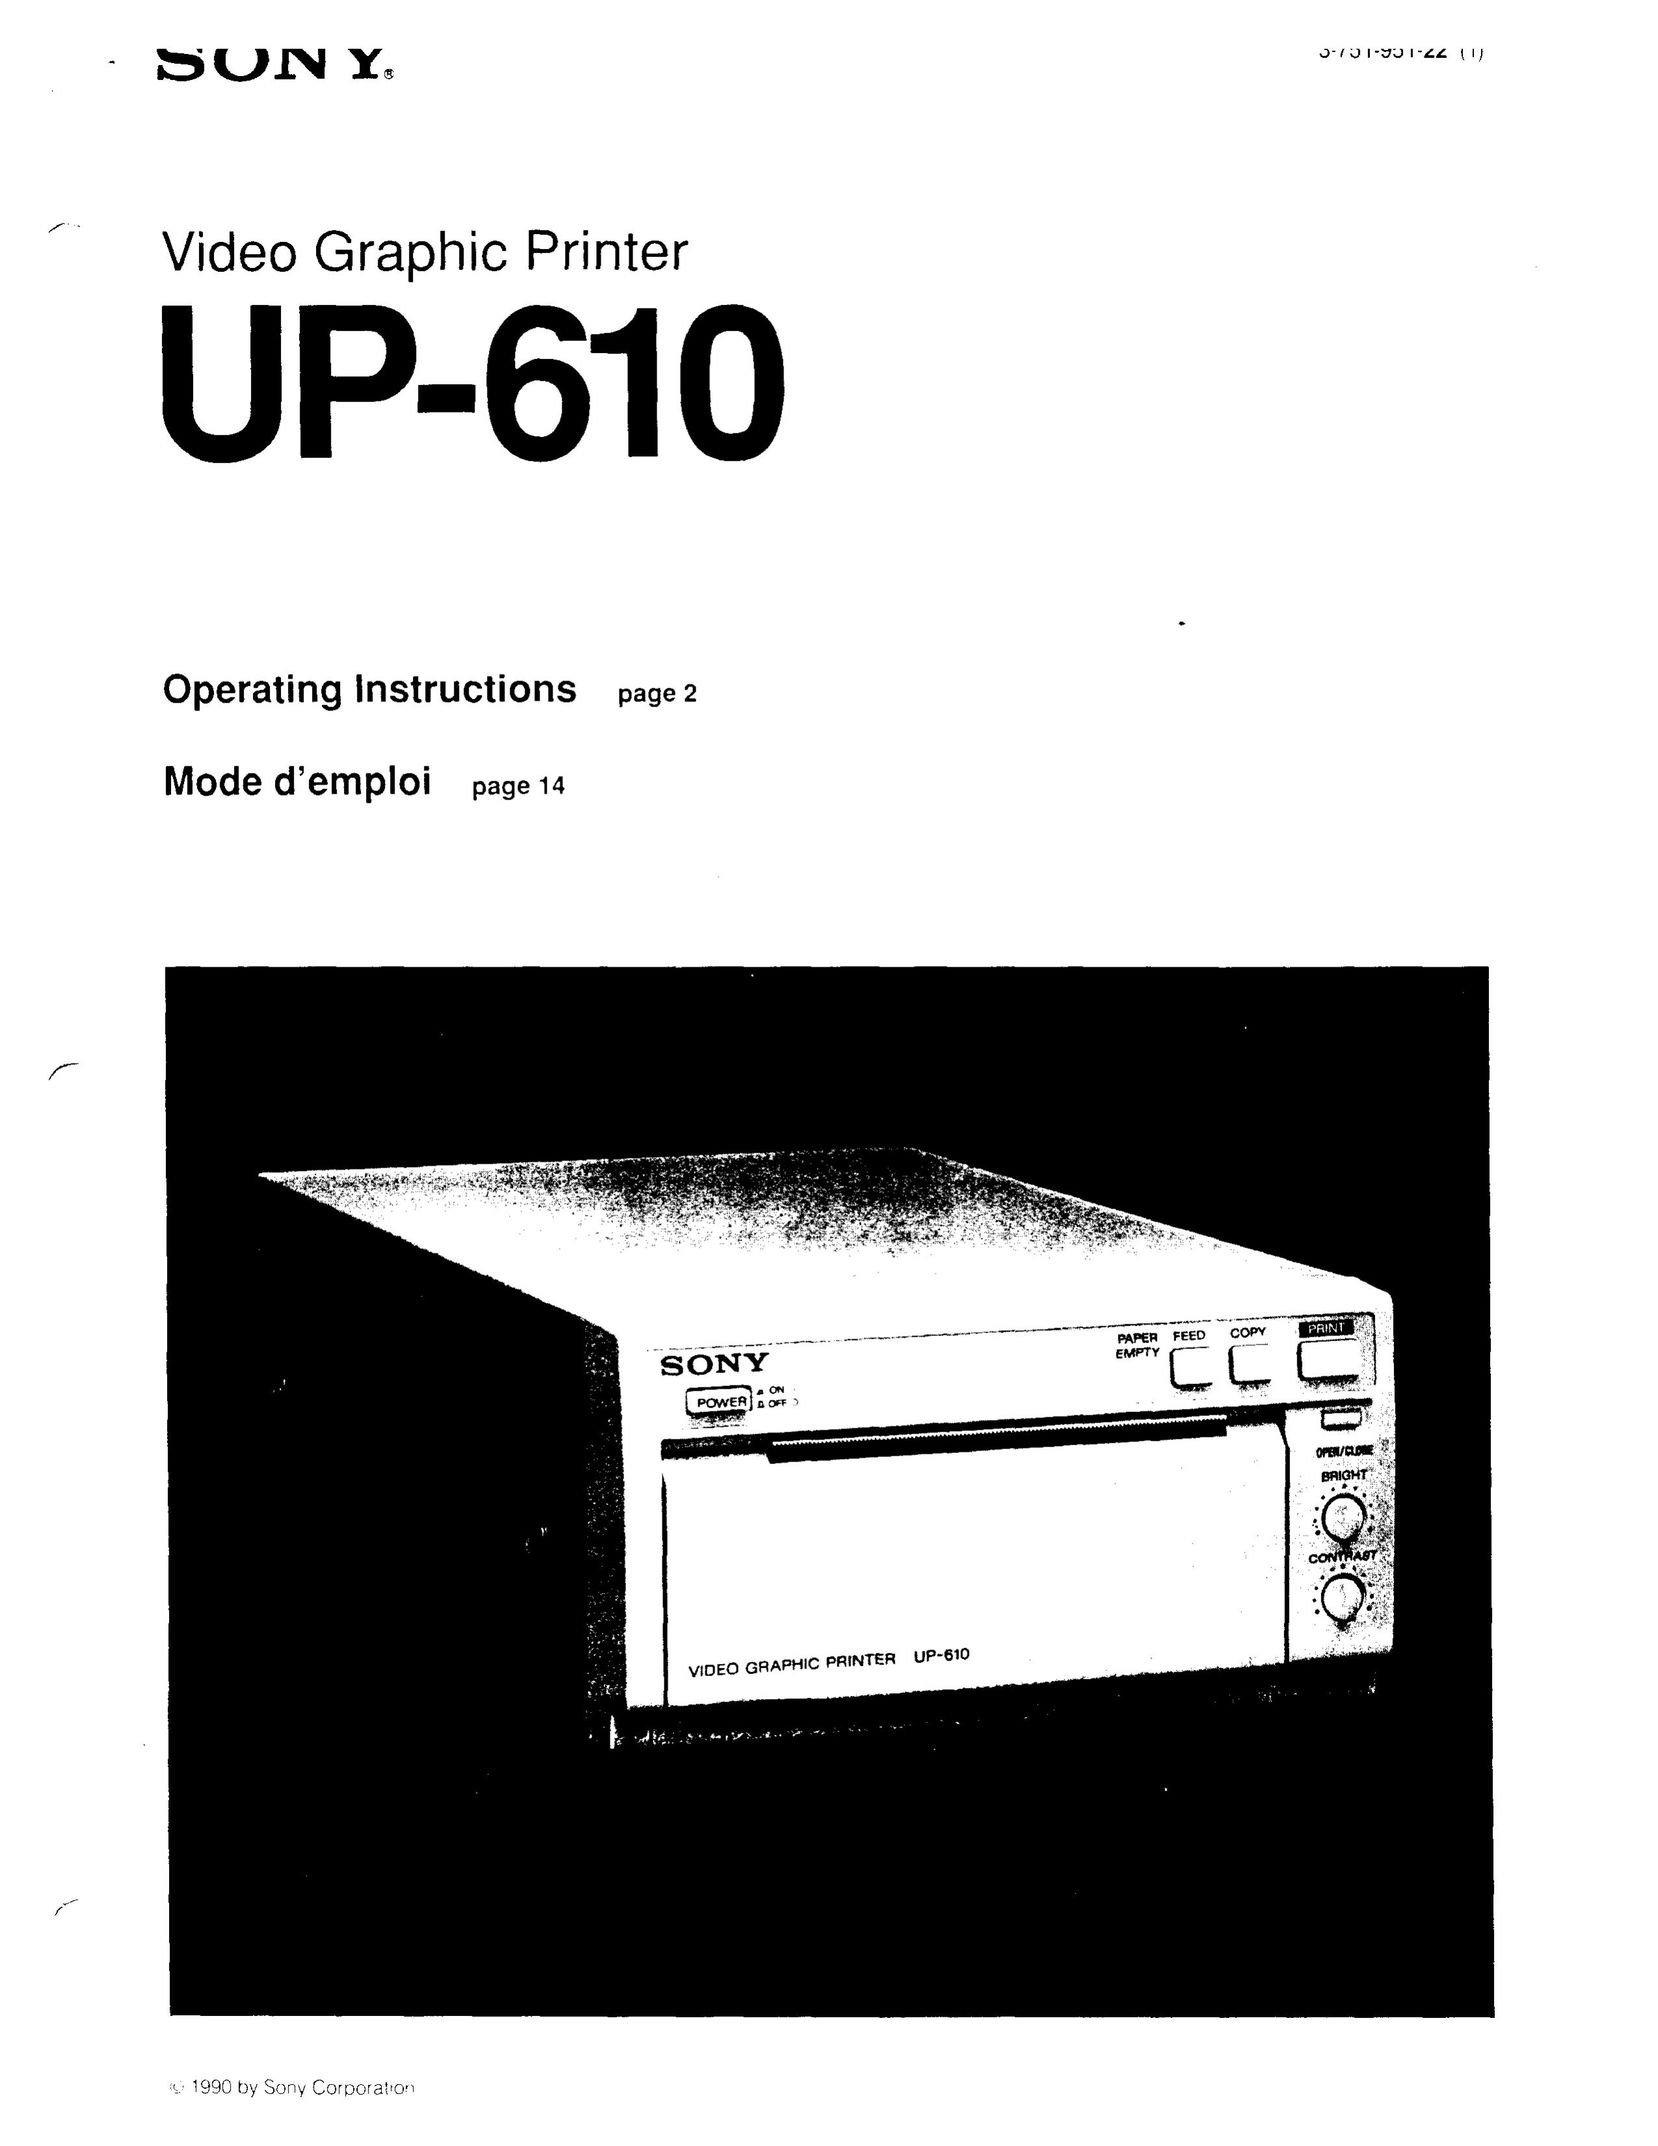 Sony UP-610 Printer User Manual